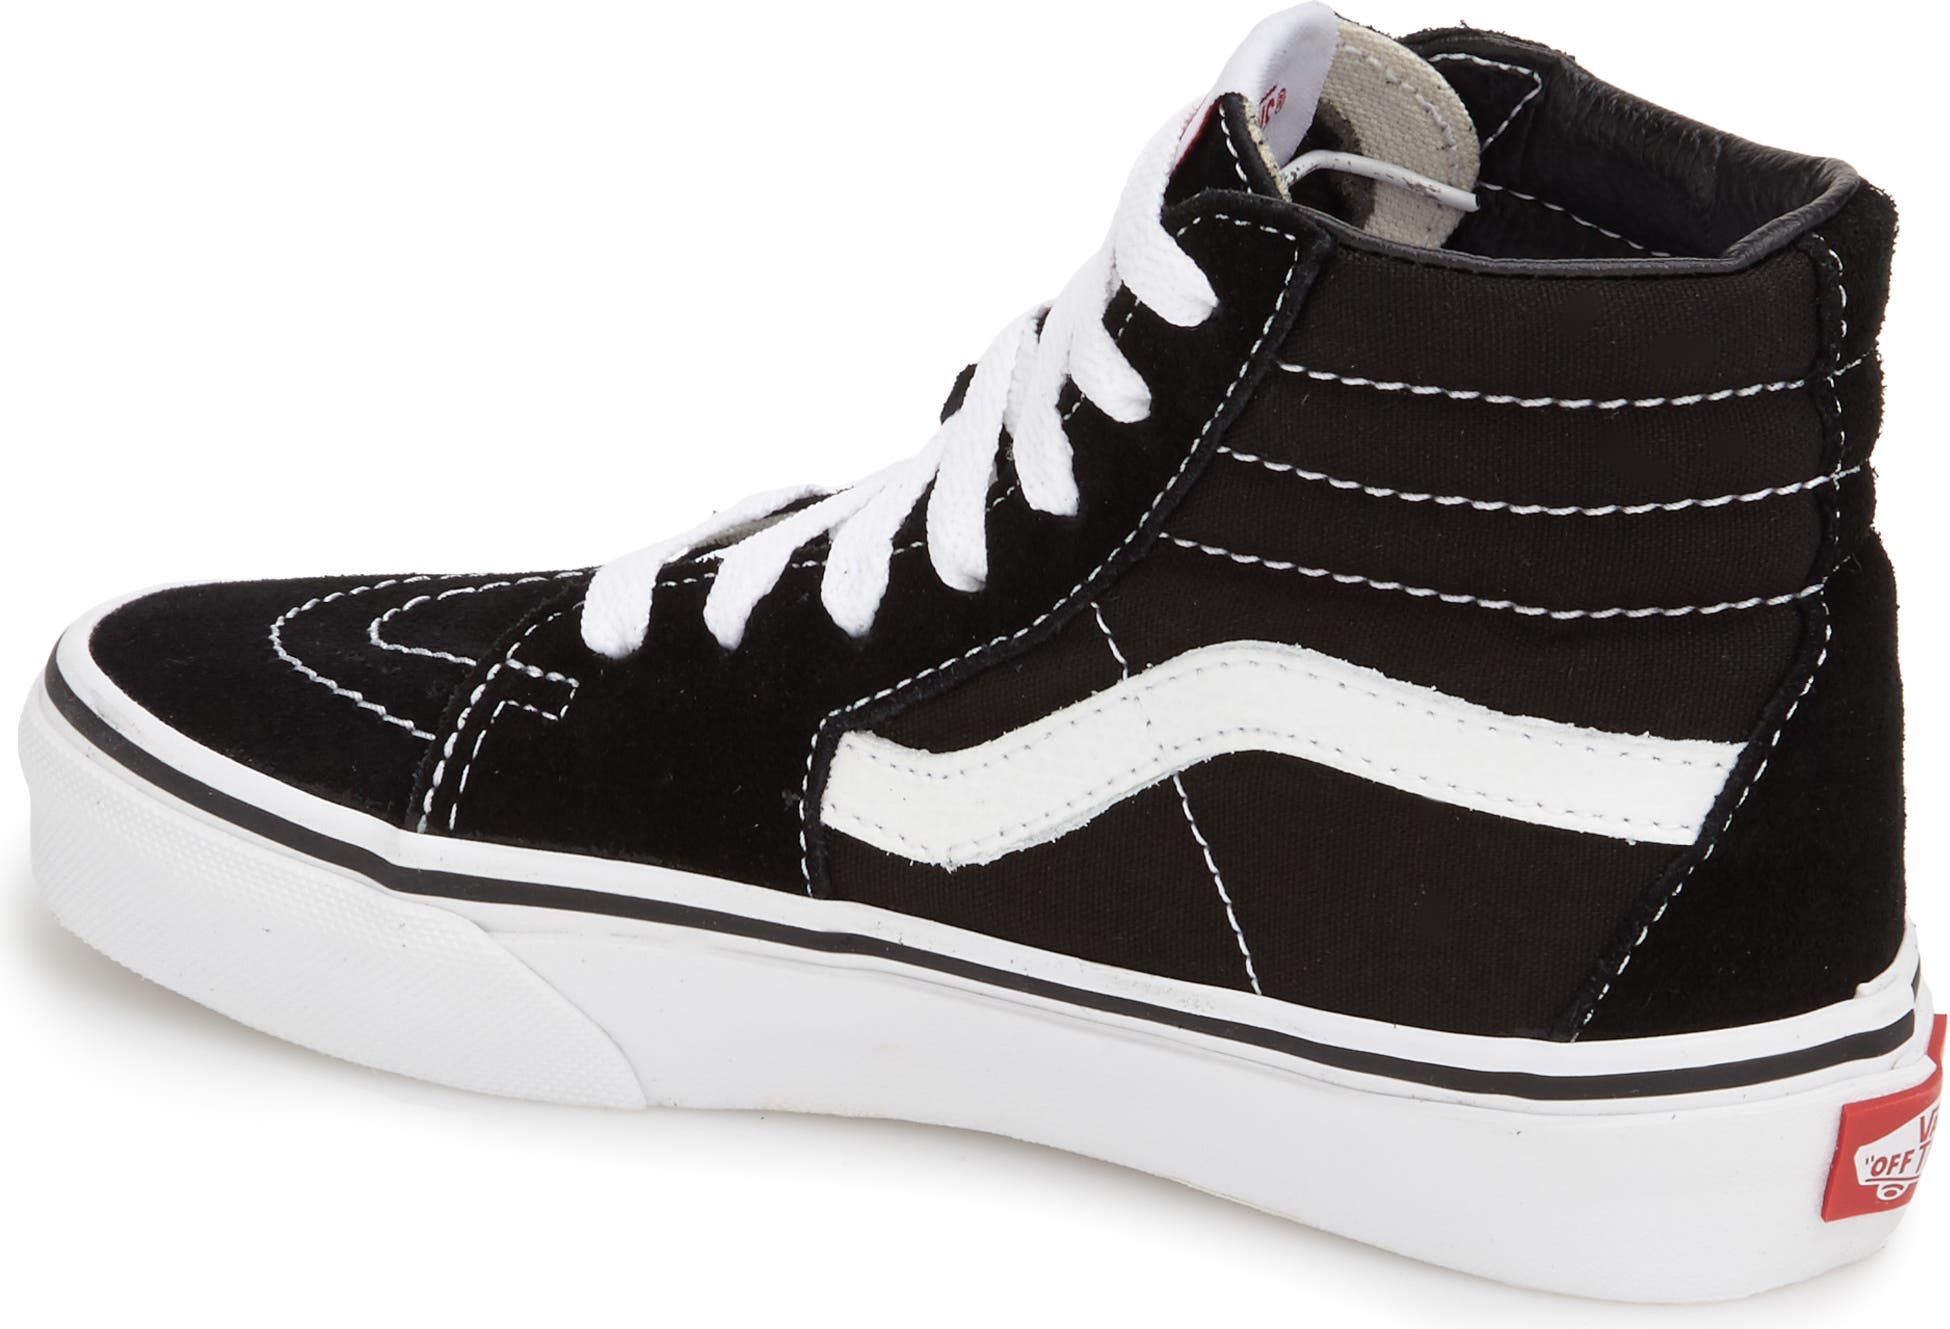 Details about   Vans Sk8 Hi Pro Glazed Ginger Black White Skate Sneakers Womens Size 8 